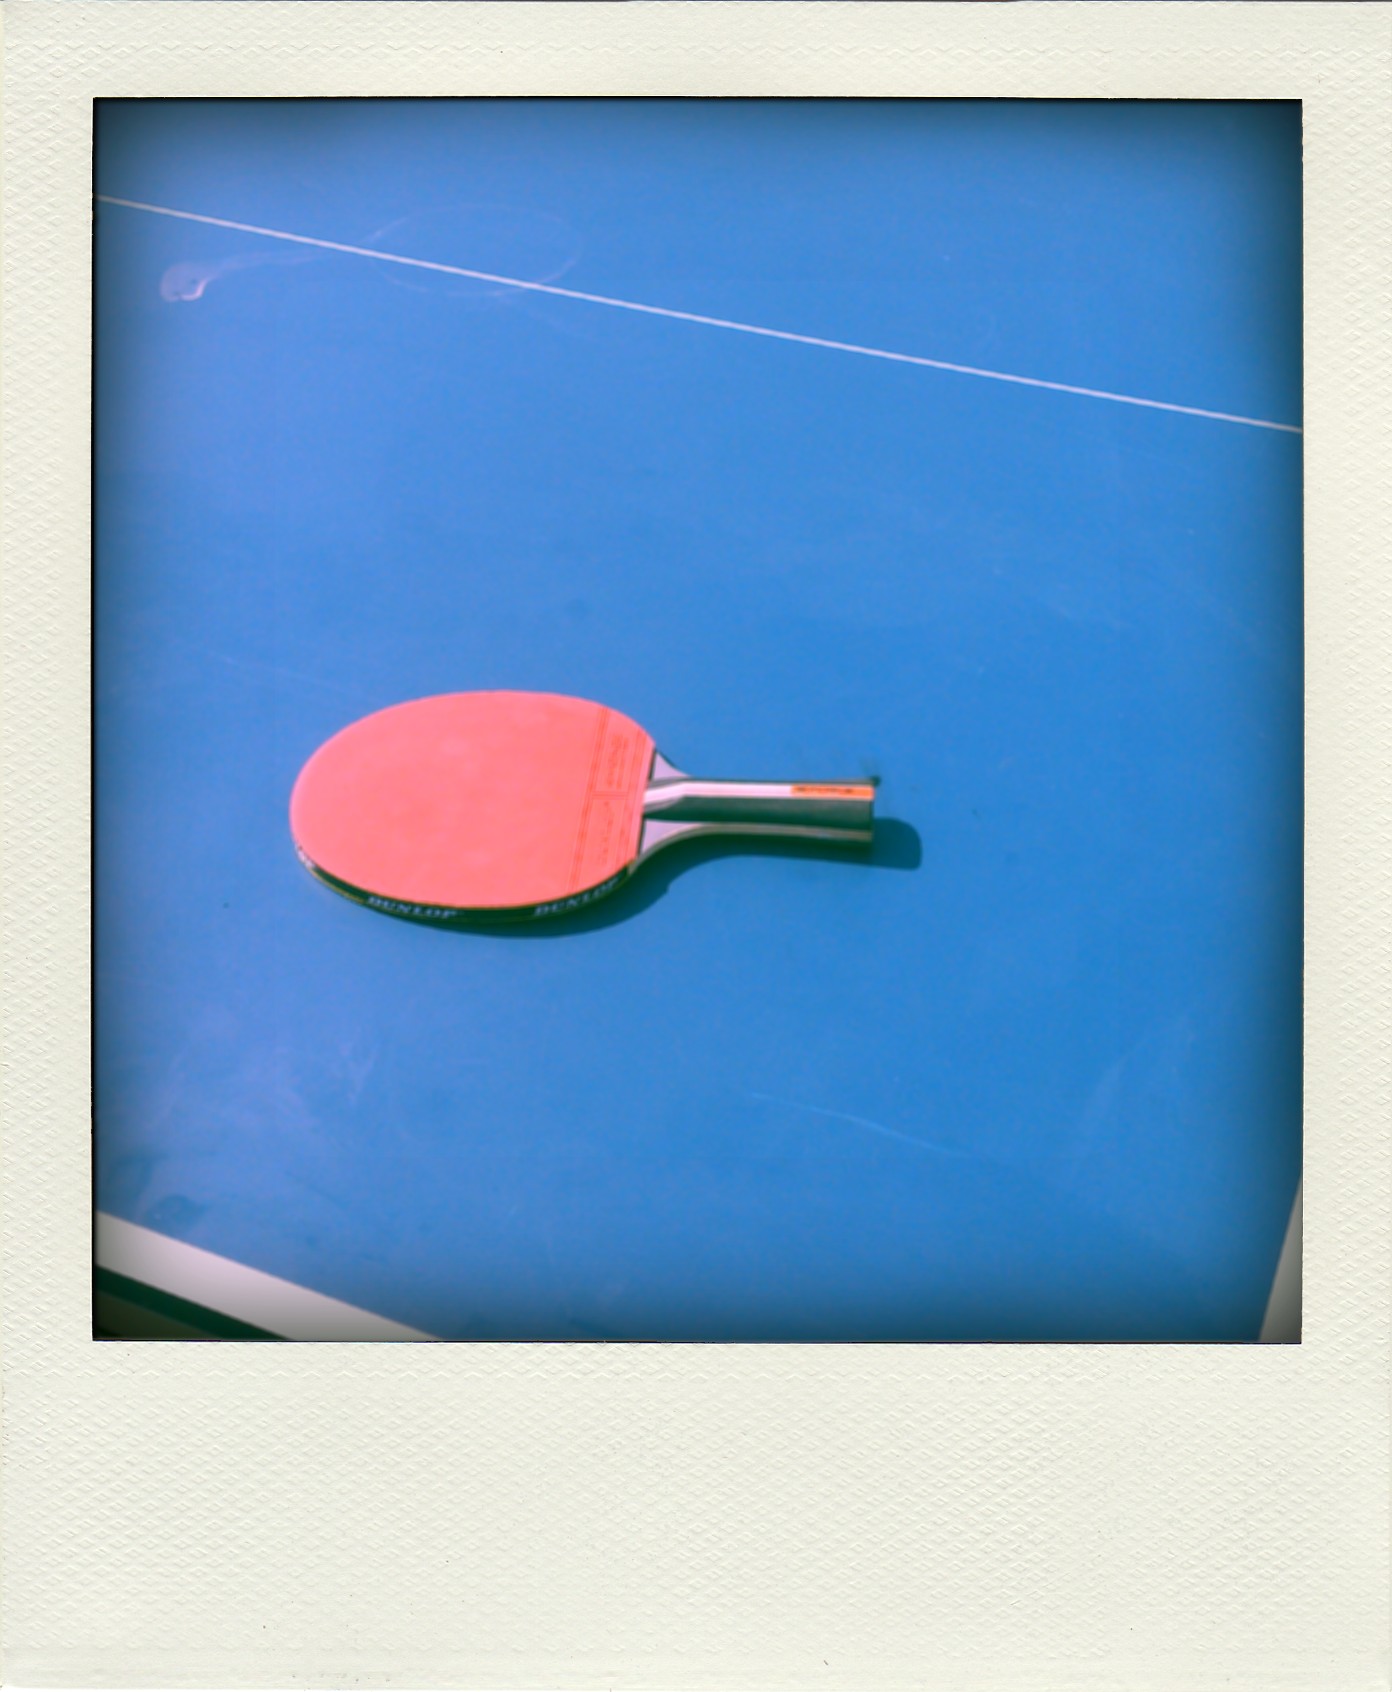 Rock The Week ping pong